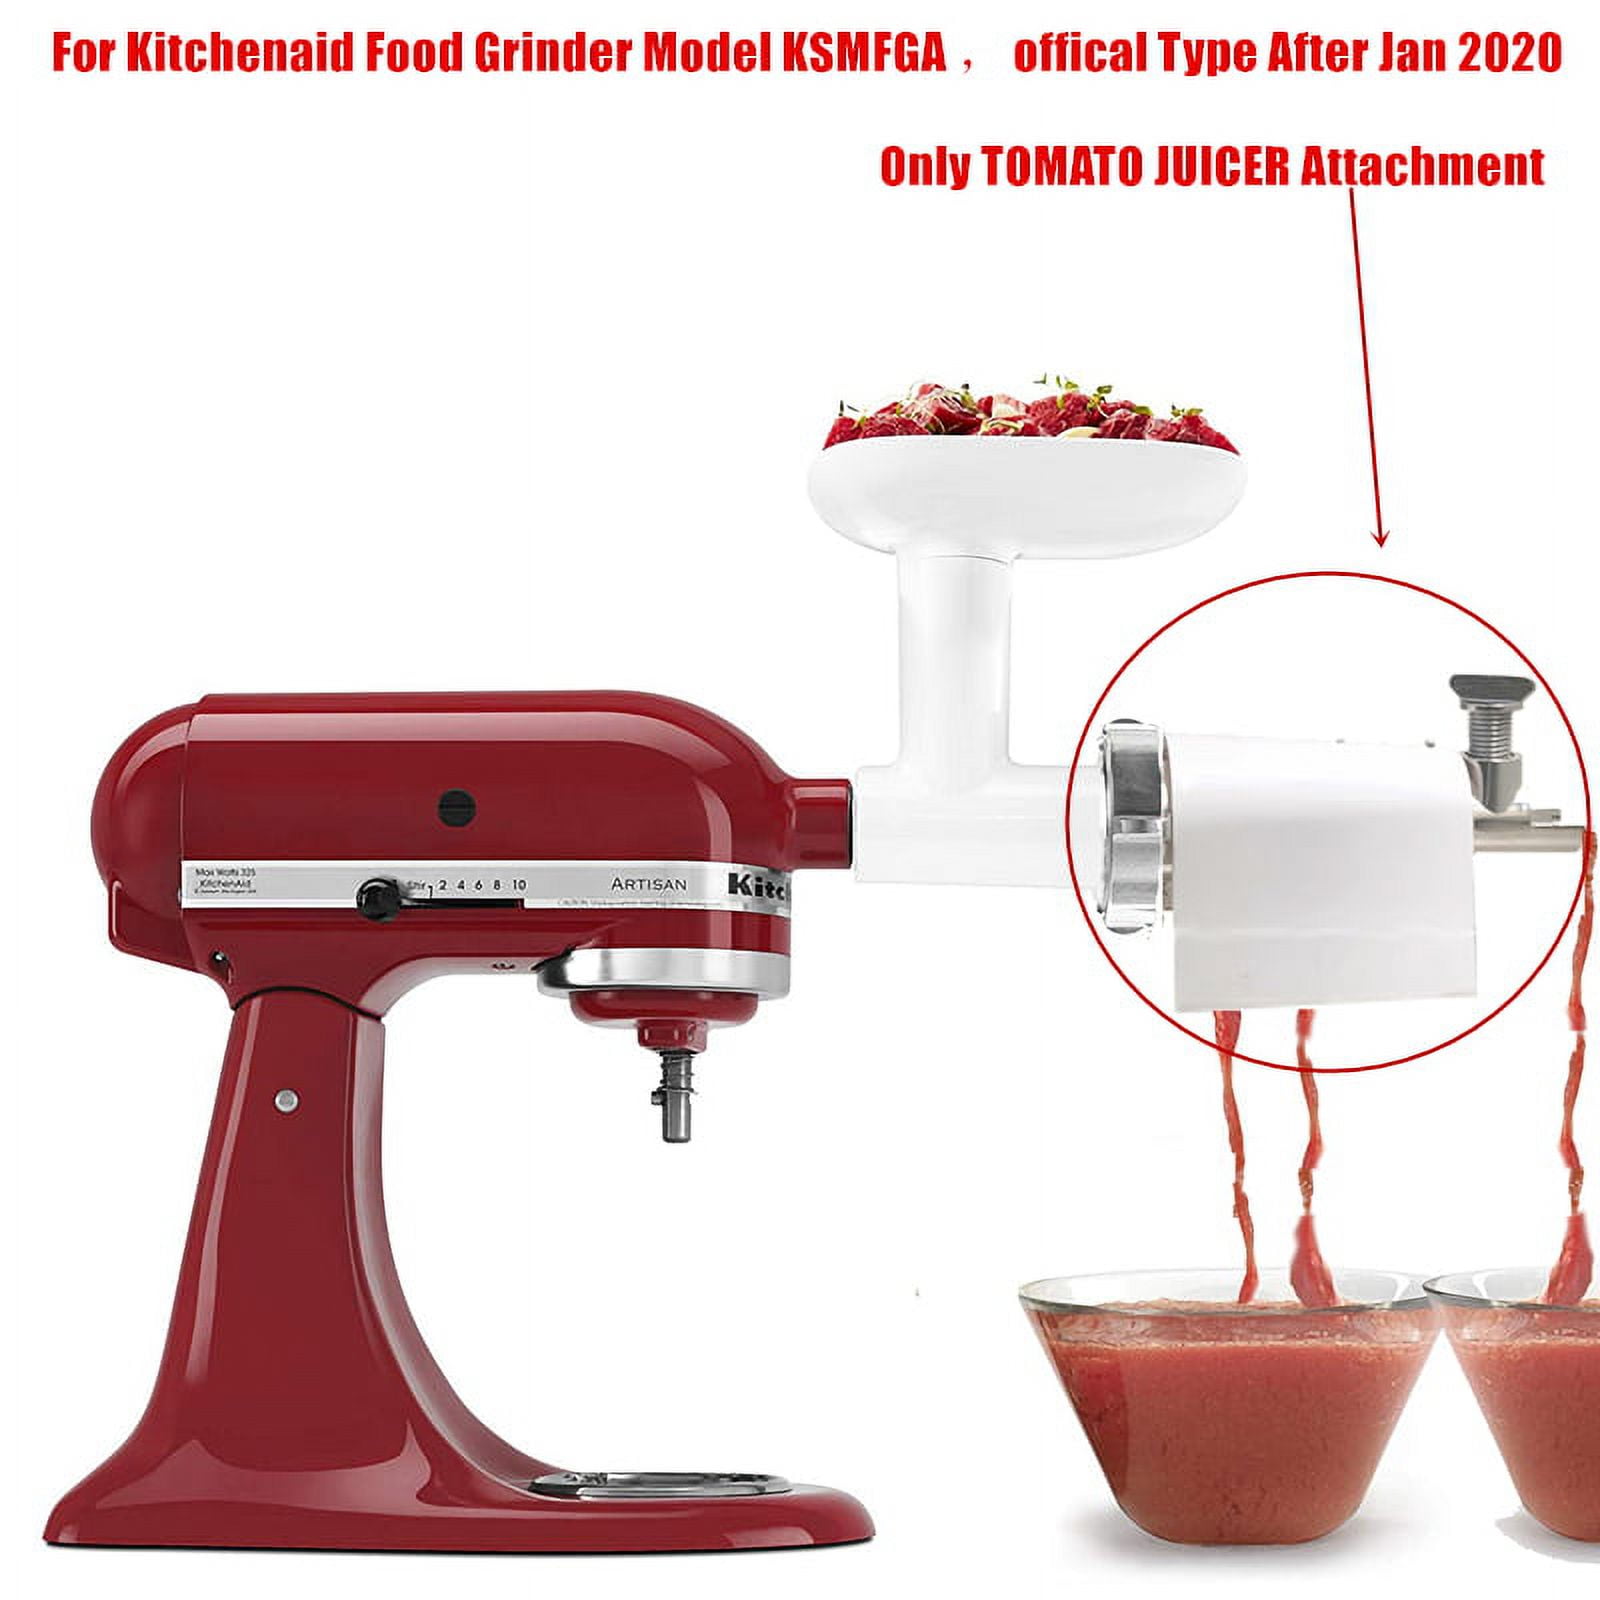 Generic iSH09-M416567mn COFUN Juicer Attachment for KitchenAid Stand Mixer,  As KitchenAid Juicer Attachment With Two Sizes of Reamer, Juicer Attachment